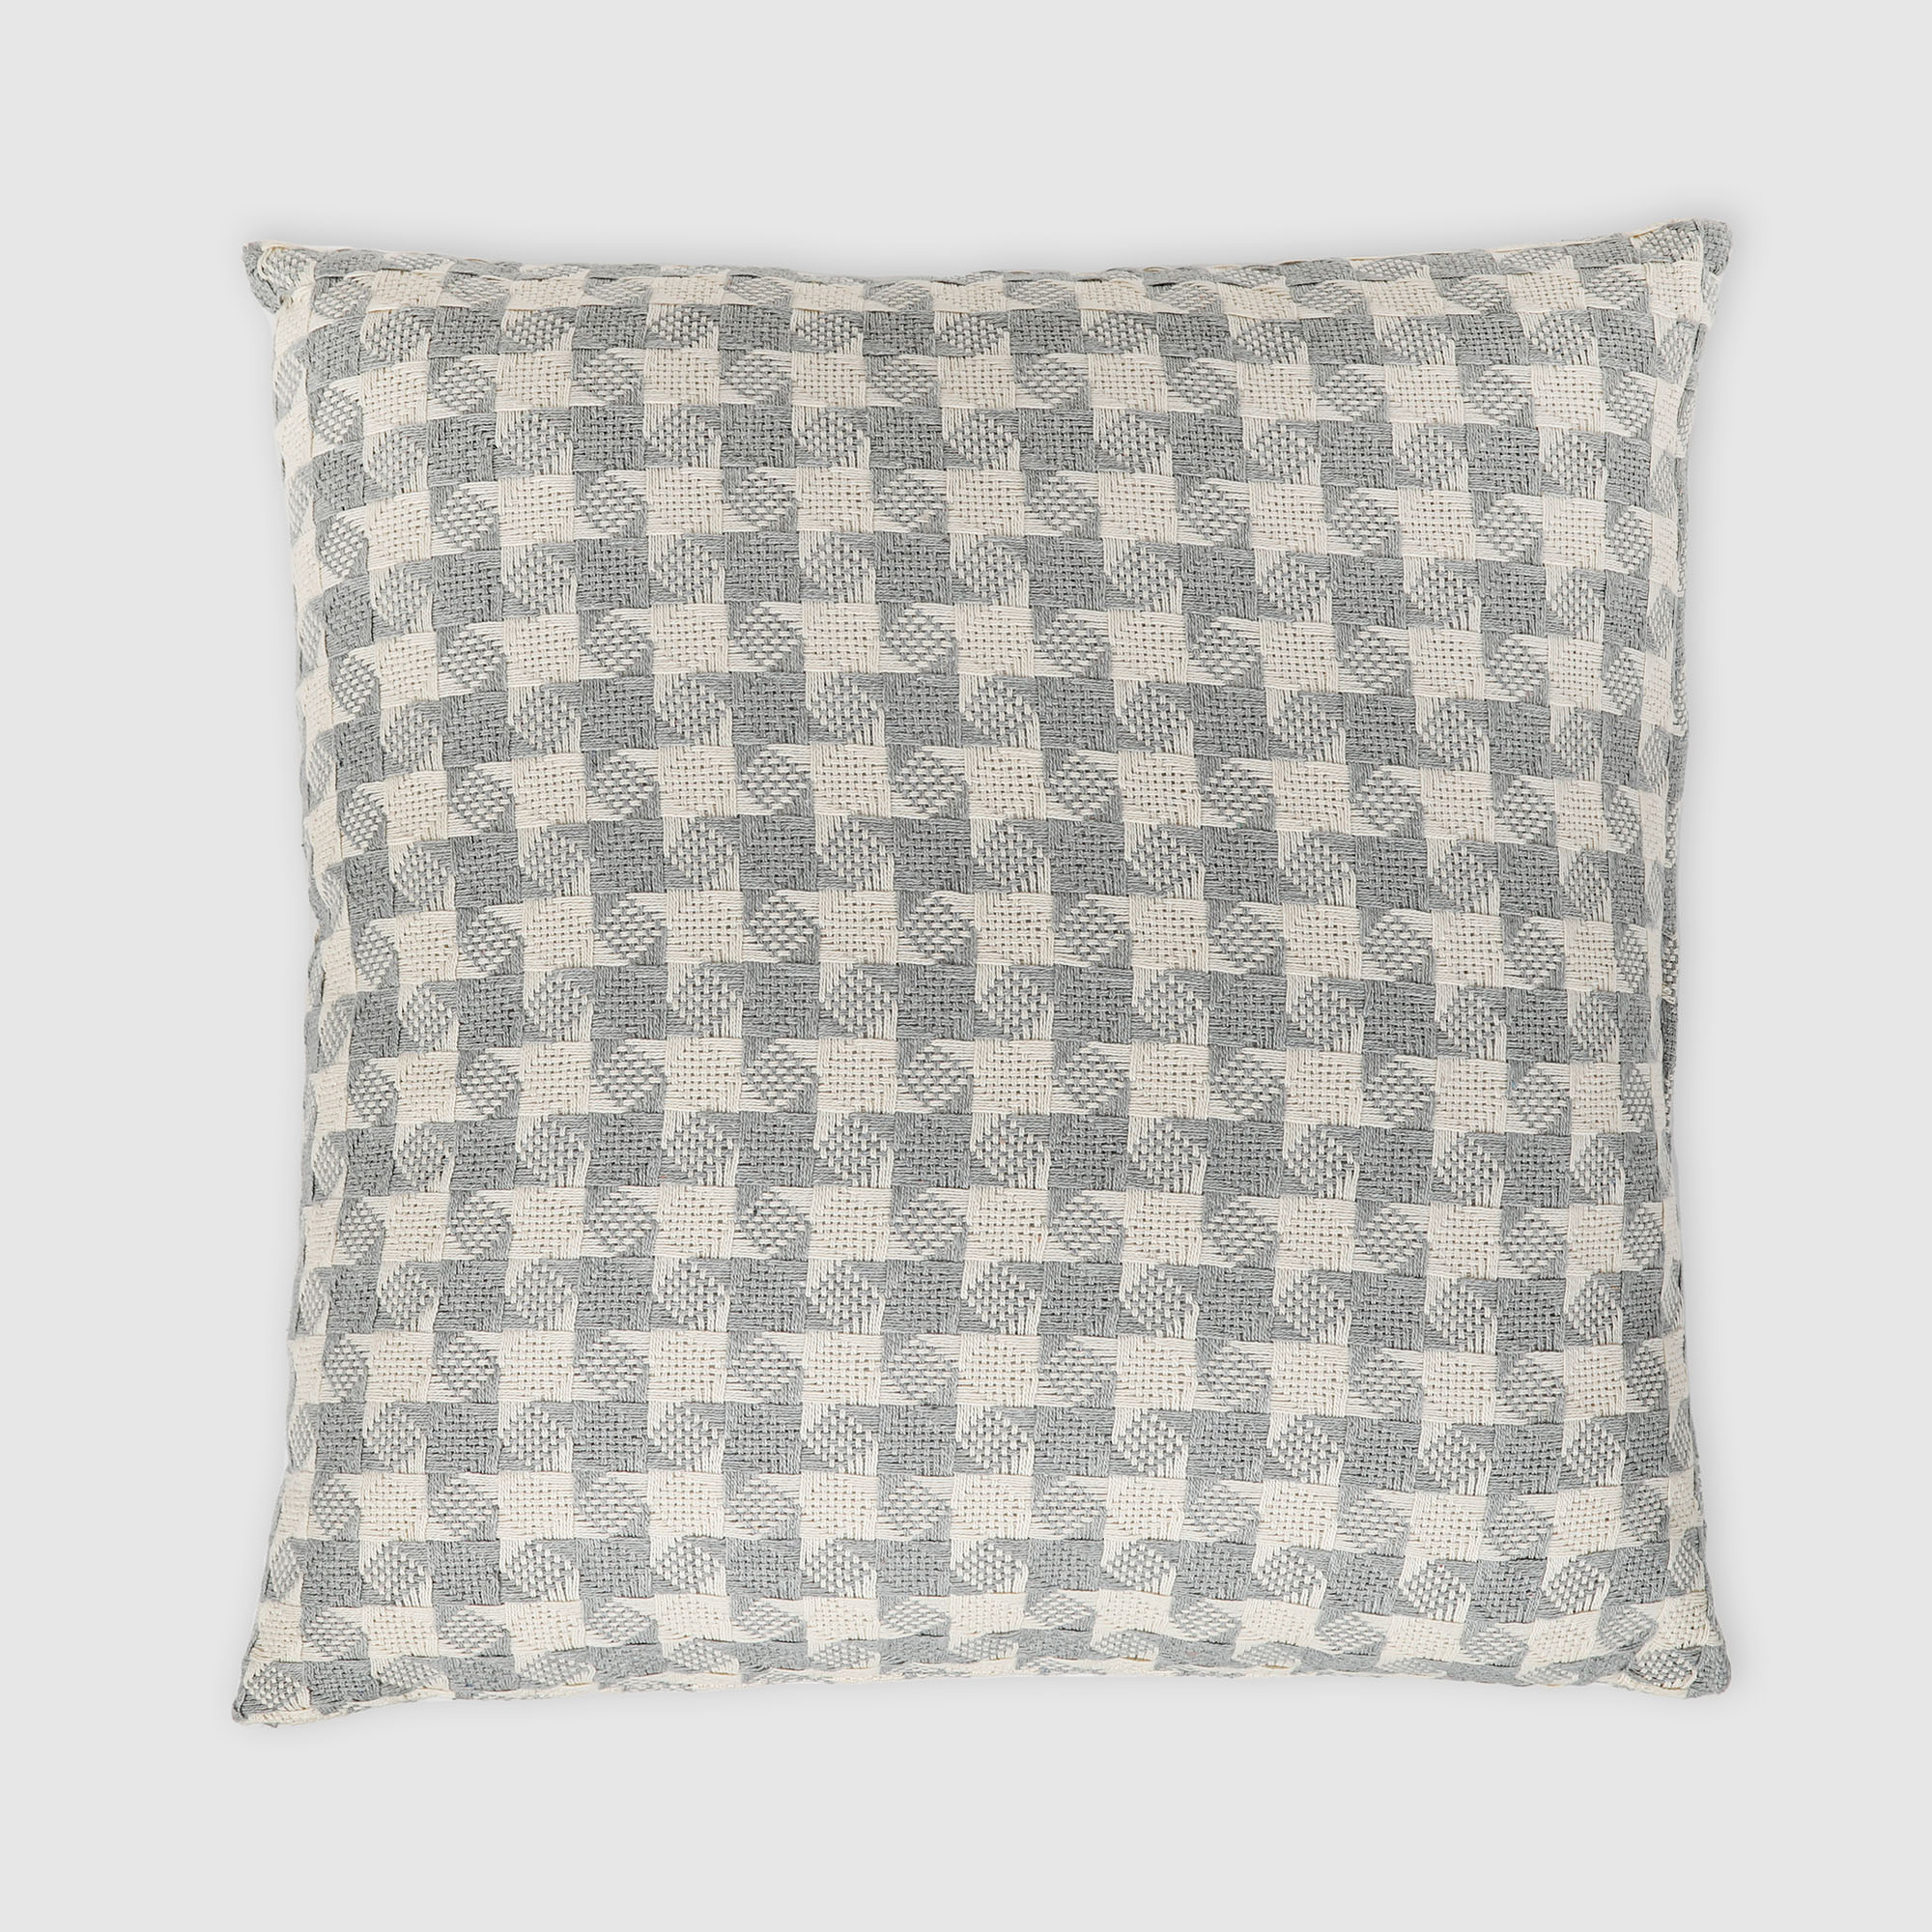 Подушка Homelines textiles Peid-de-Poule grey серая 45х45 см, цвет серый - фото 1